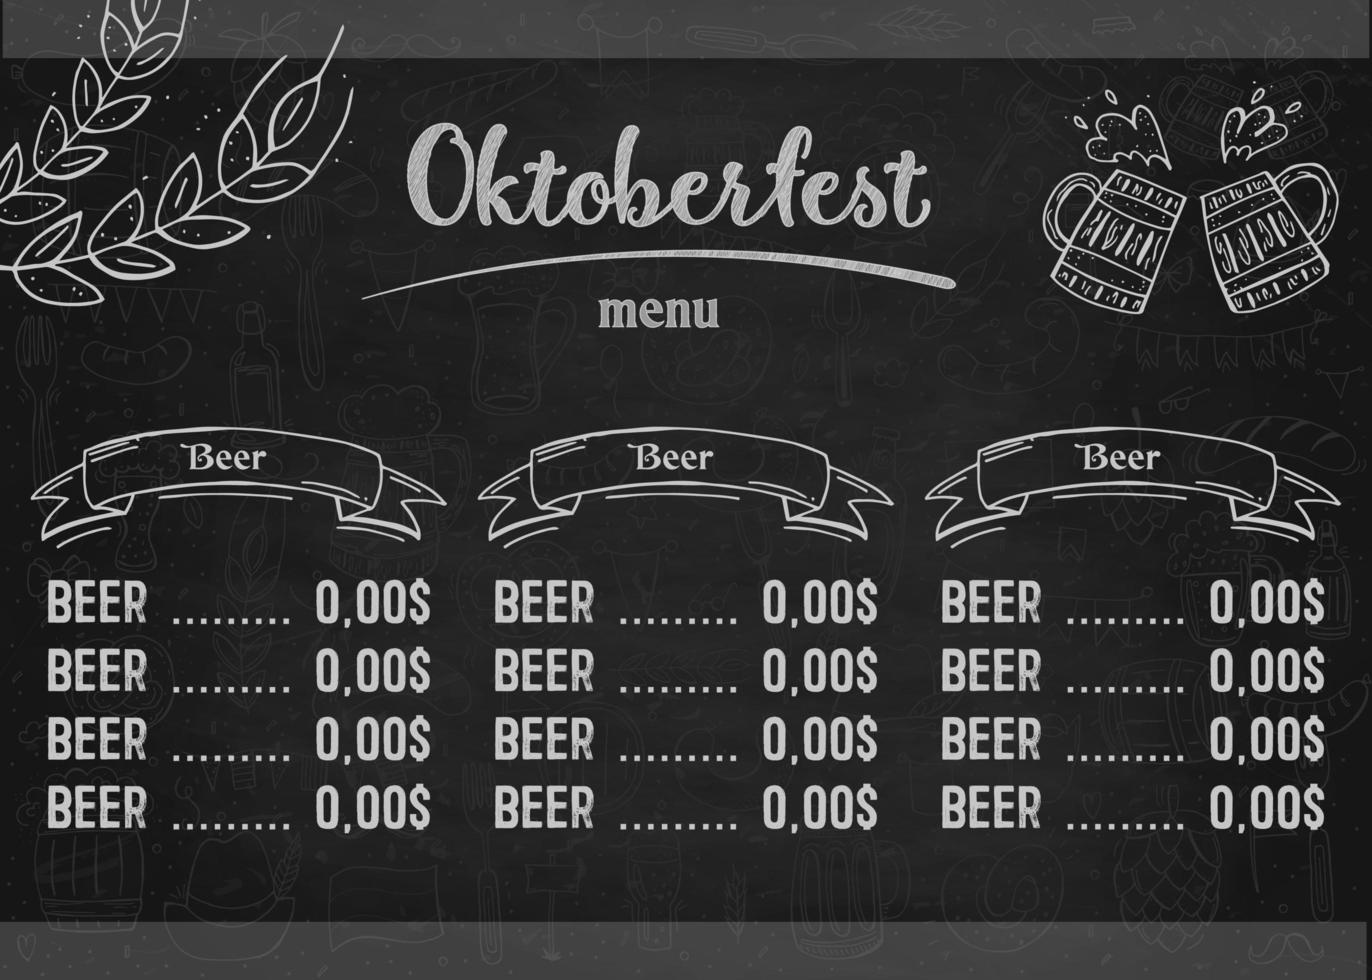 Oktoberfest 2022 - Beer Festival. Hand-drawn Doodle Elements. German Traditional holiday. Octoberfest, Craft Beer. Blue-white rhombus. Horizontal Beer menu. vector